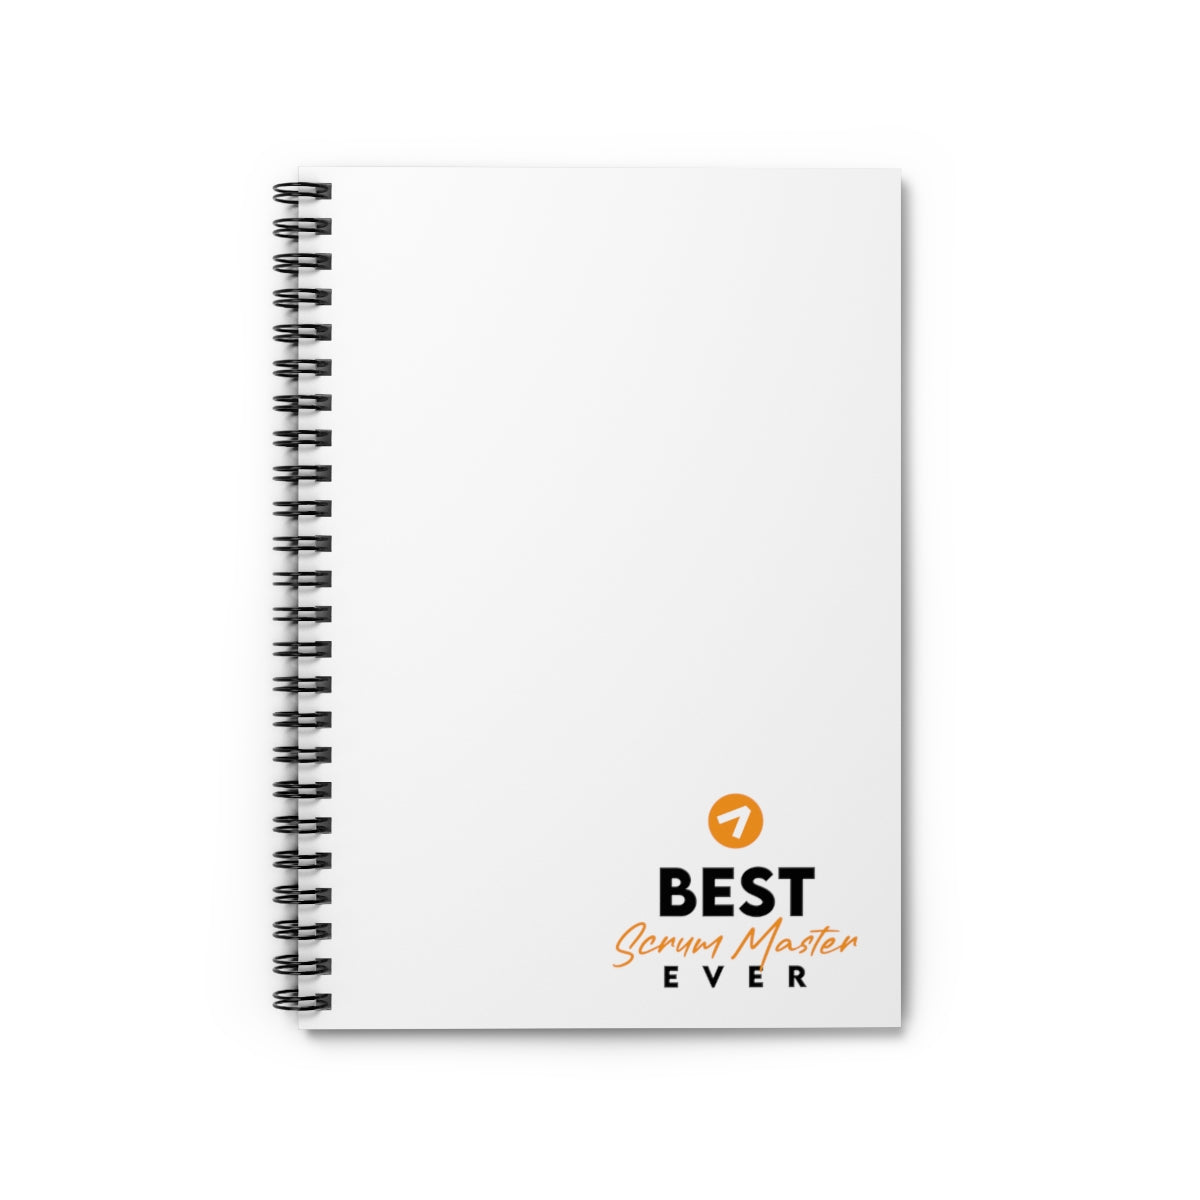 Best Scrum Master ever - Orange - Spiral Notebook - Ruled Line